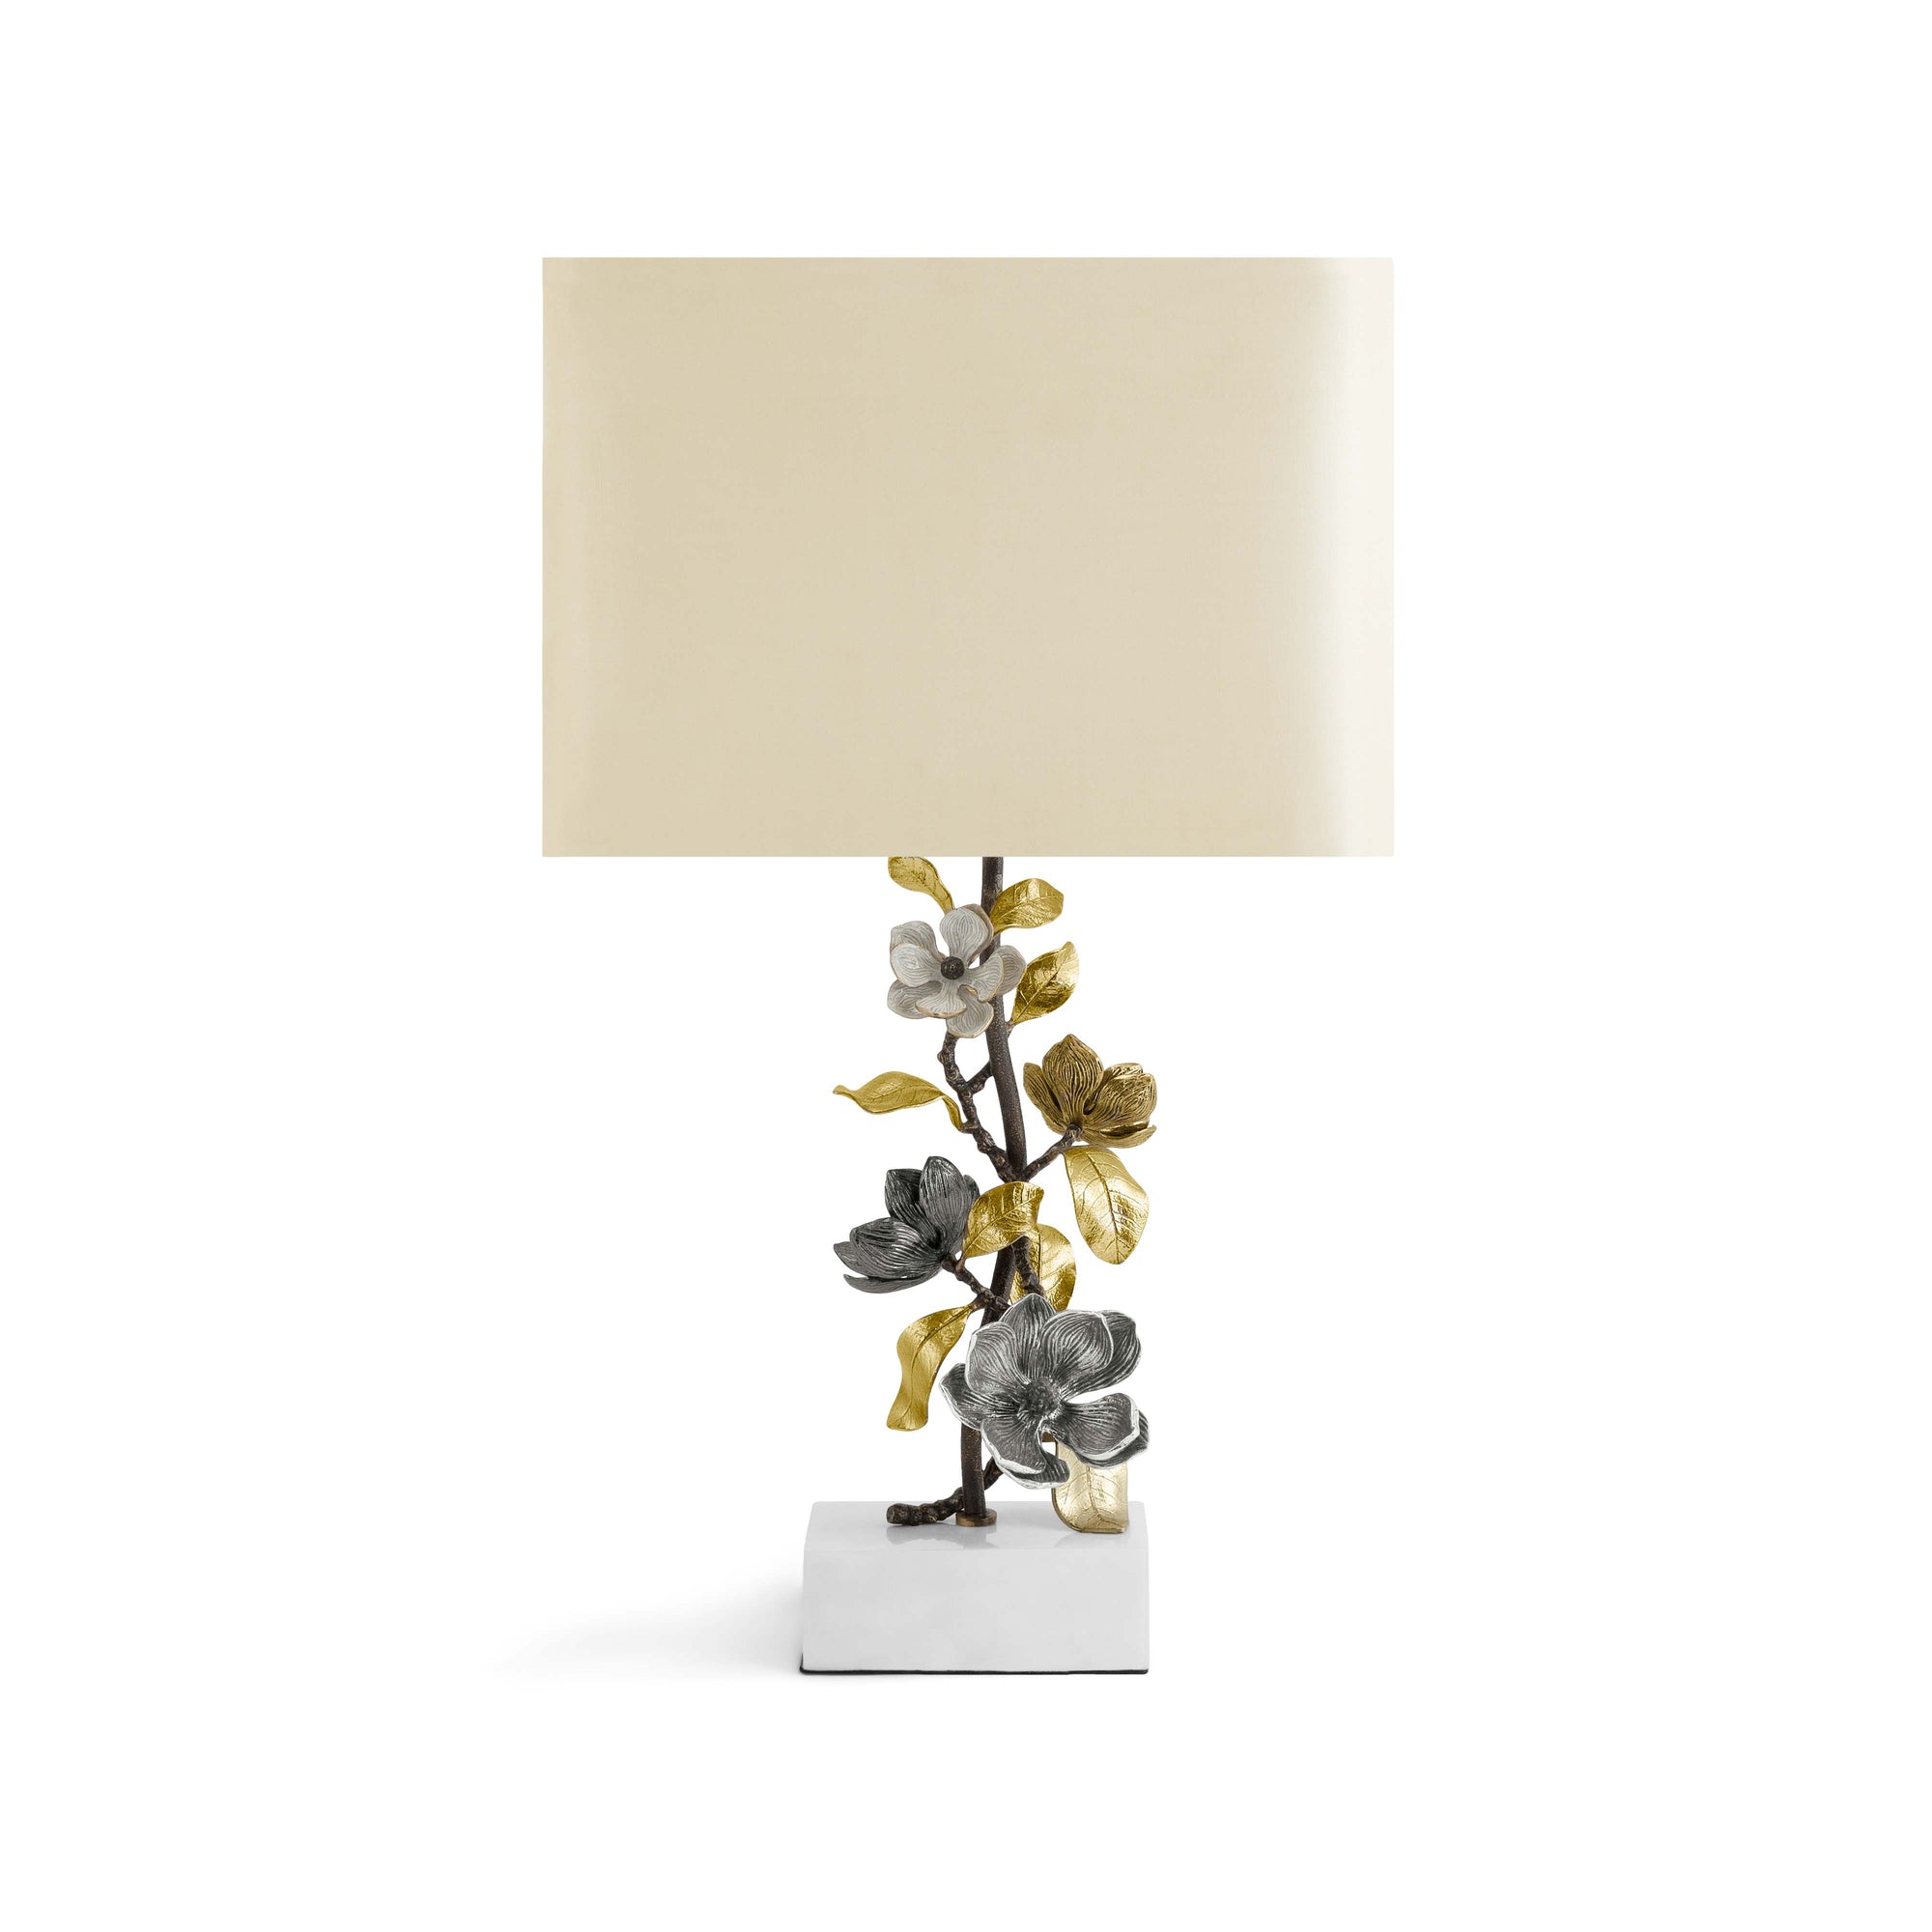 Michael Aram Vintage Bloom Table Lamp